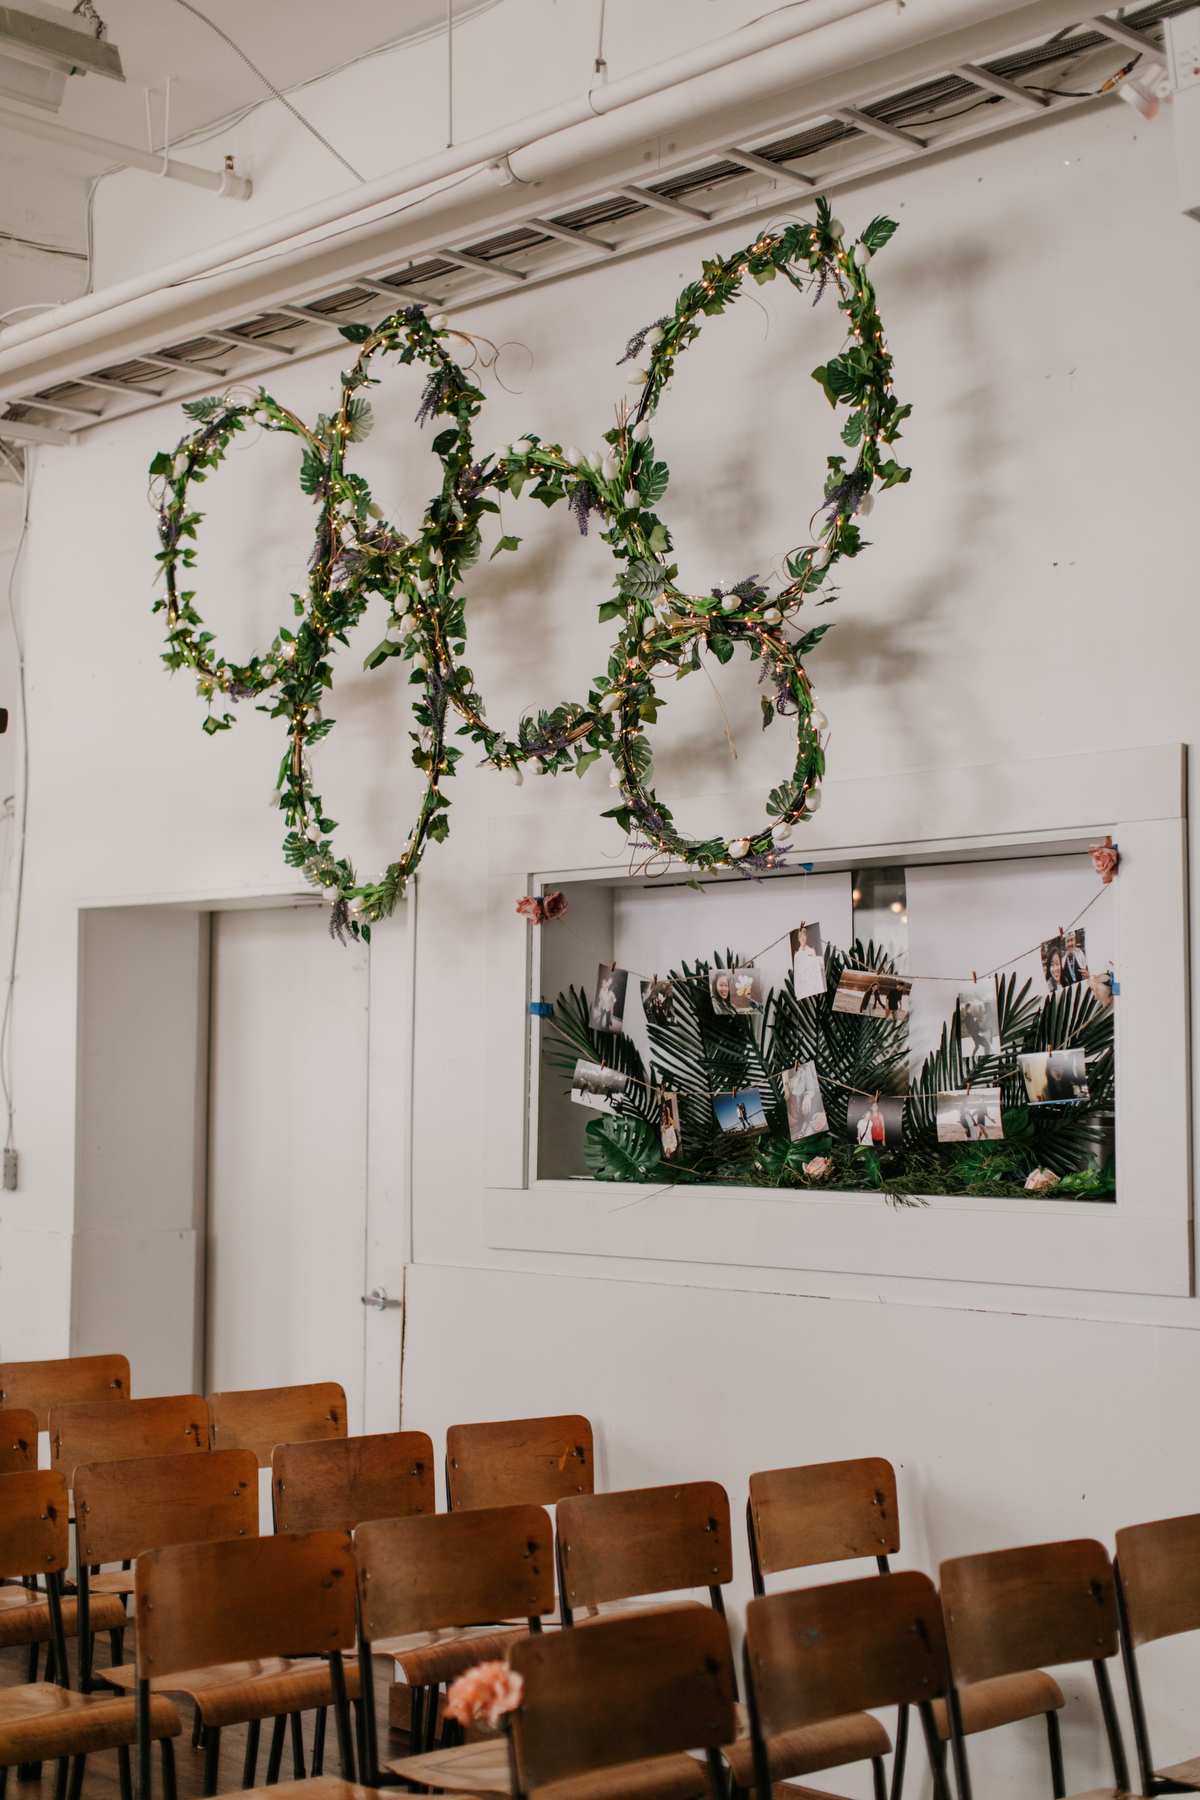 100 braid street studios wedding photos